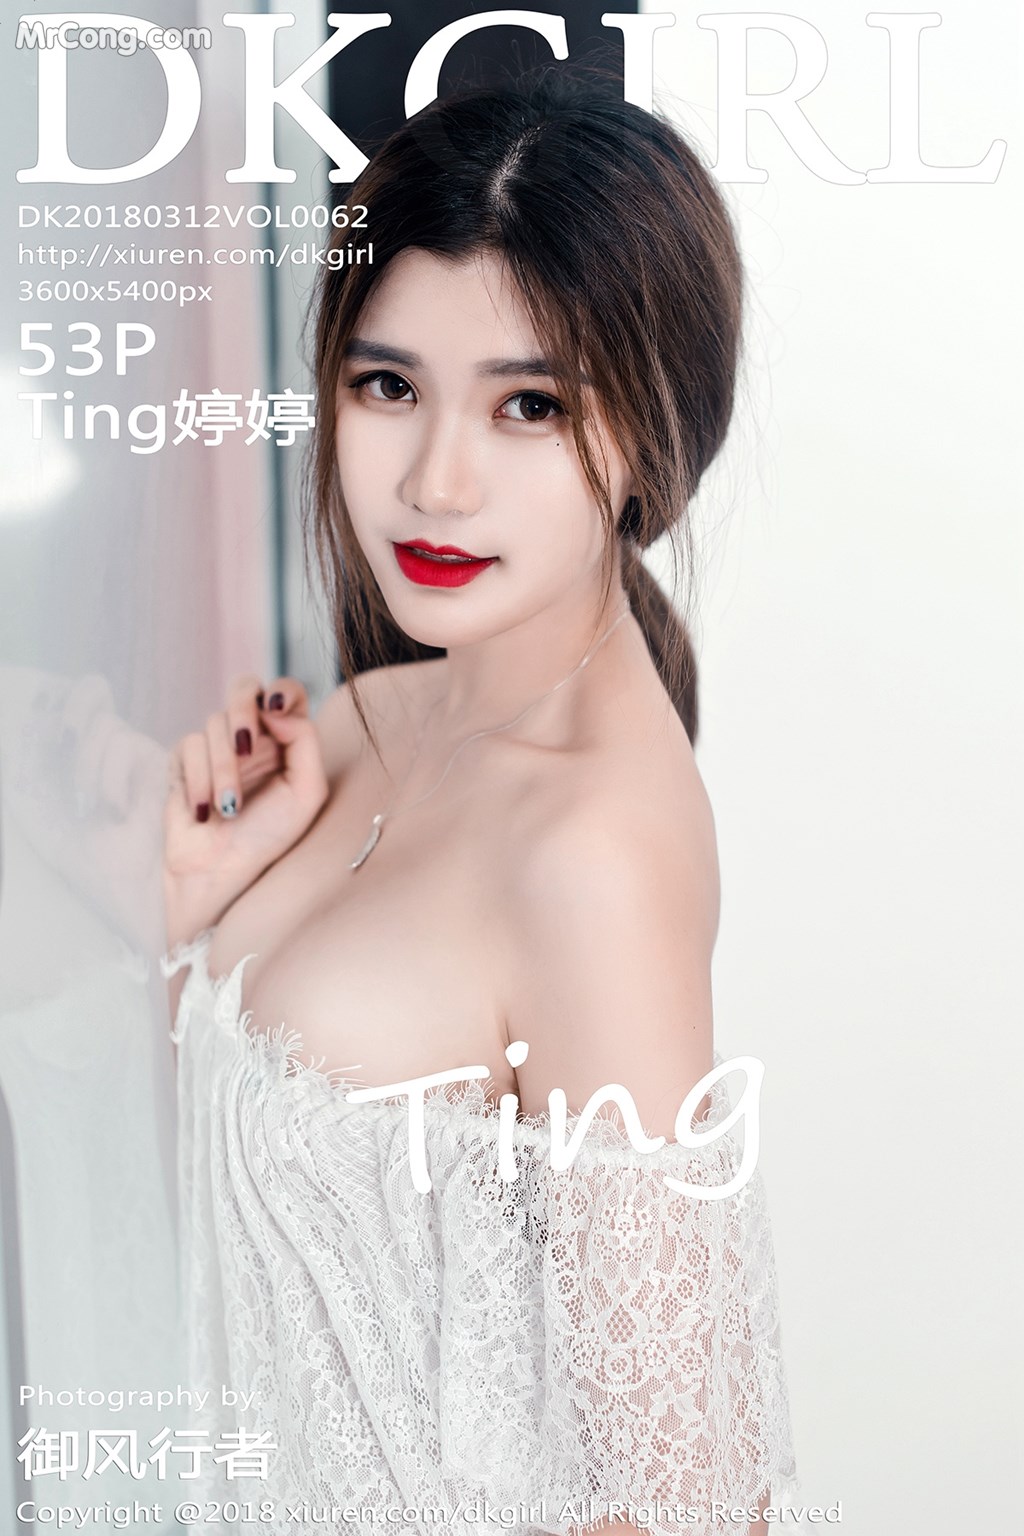 DKGirl Vol.062: Ting Model 婷婷 (54 photos)